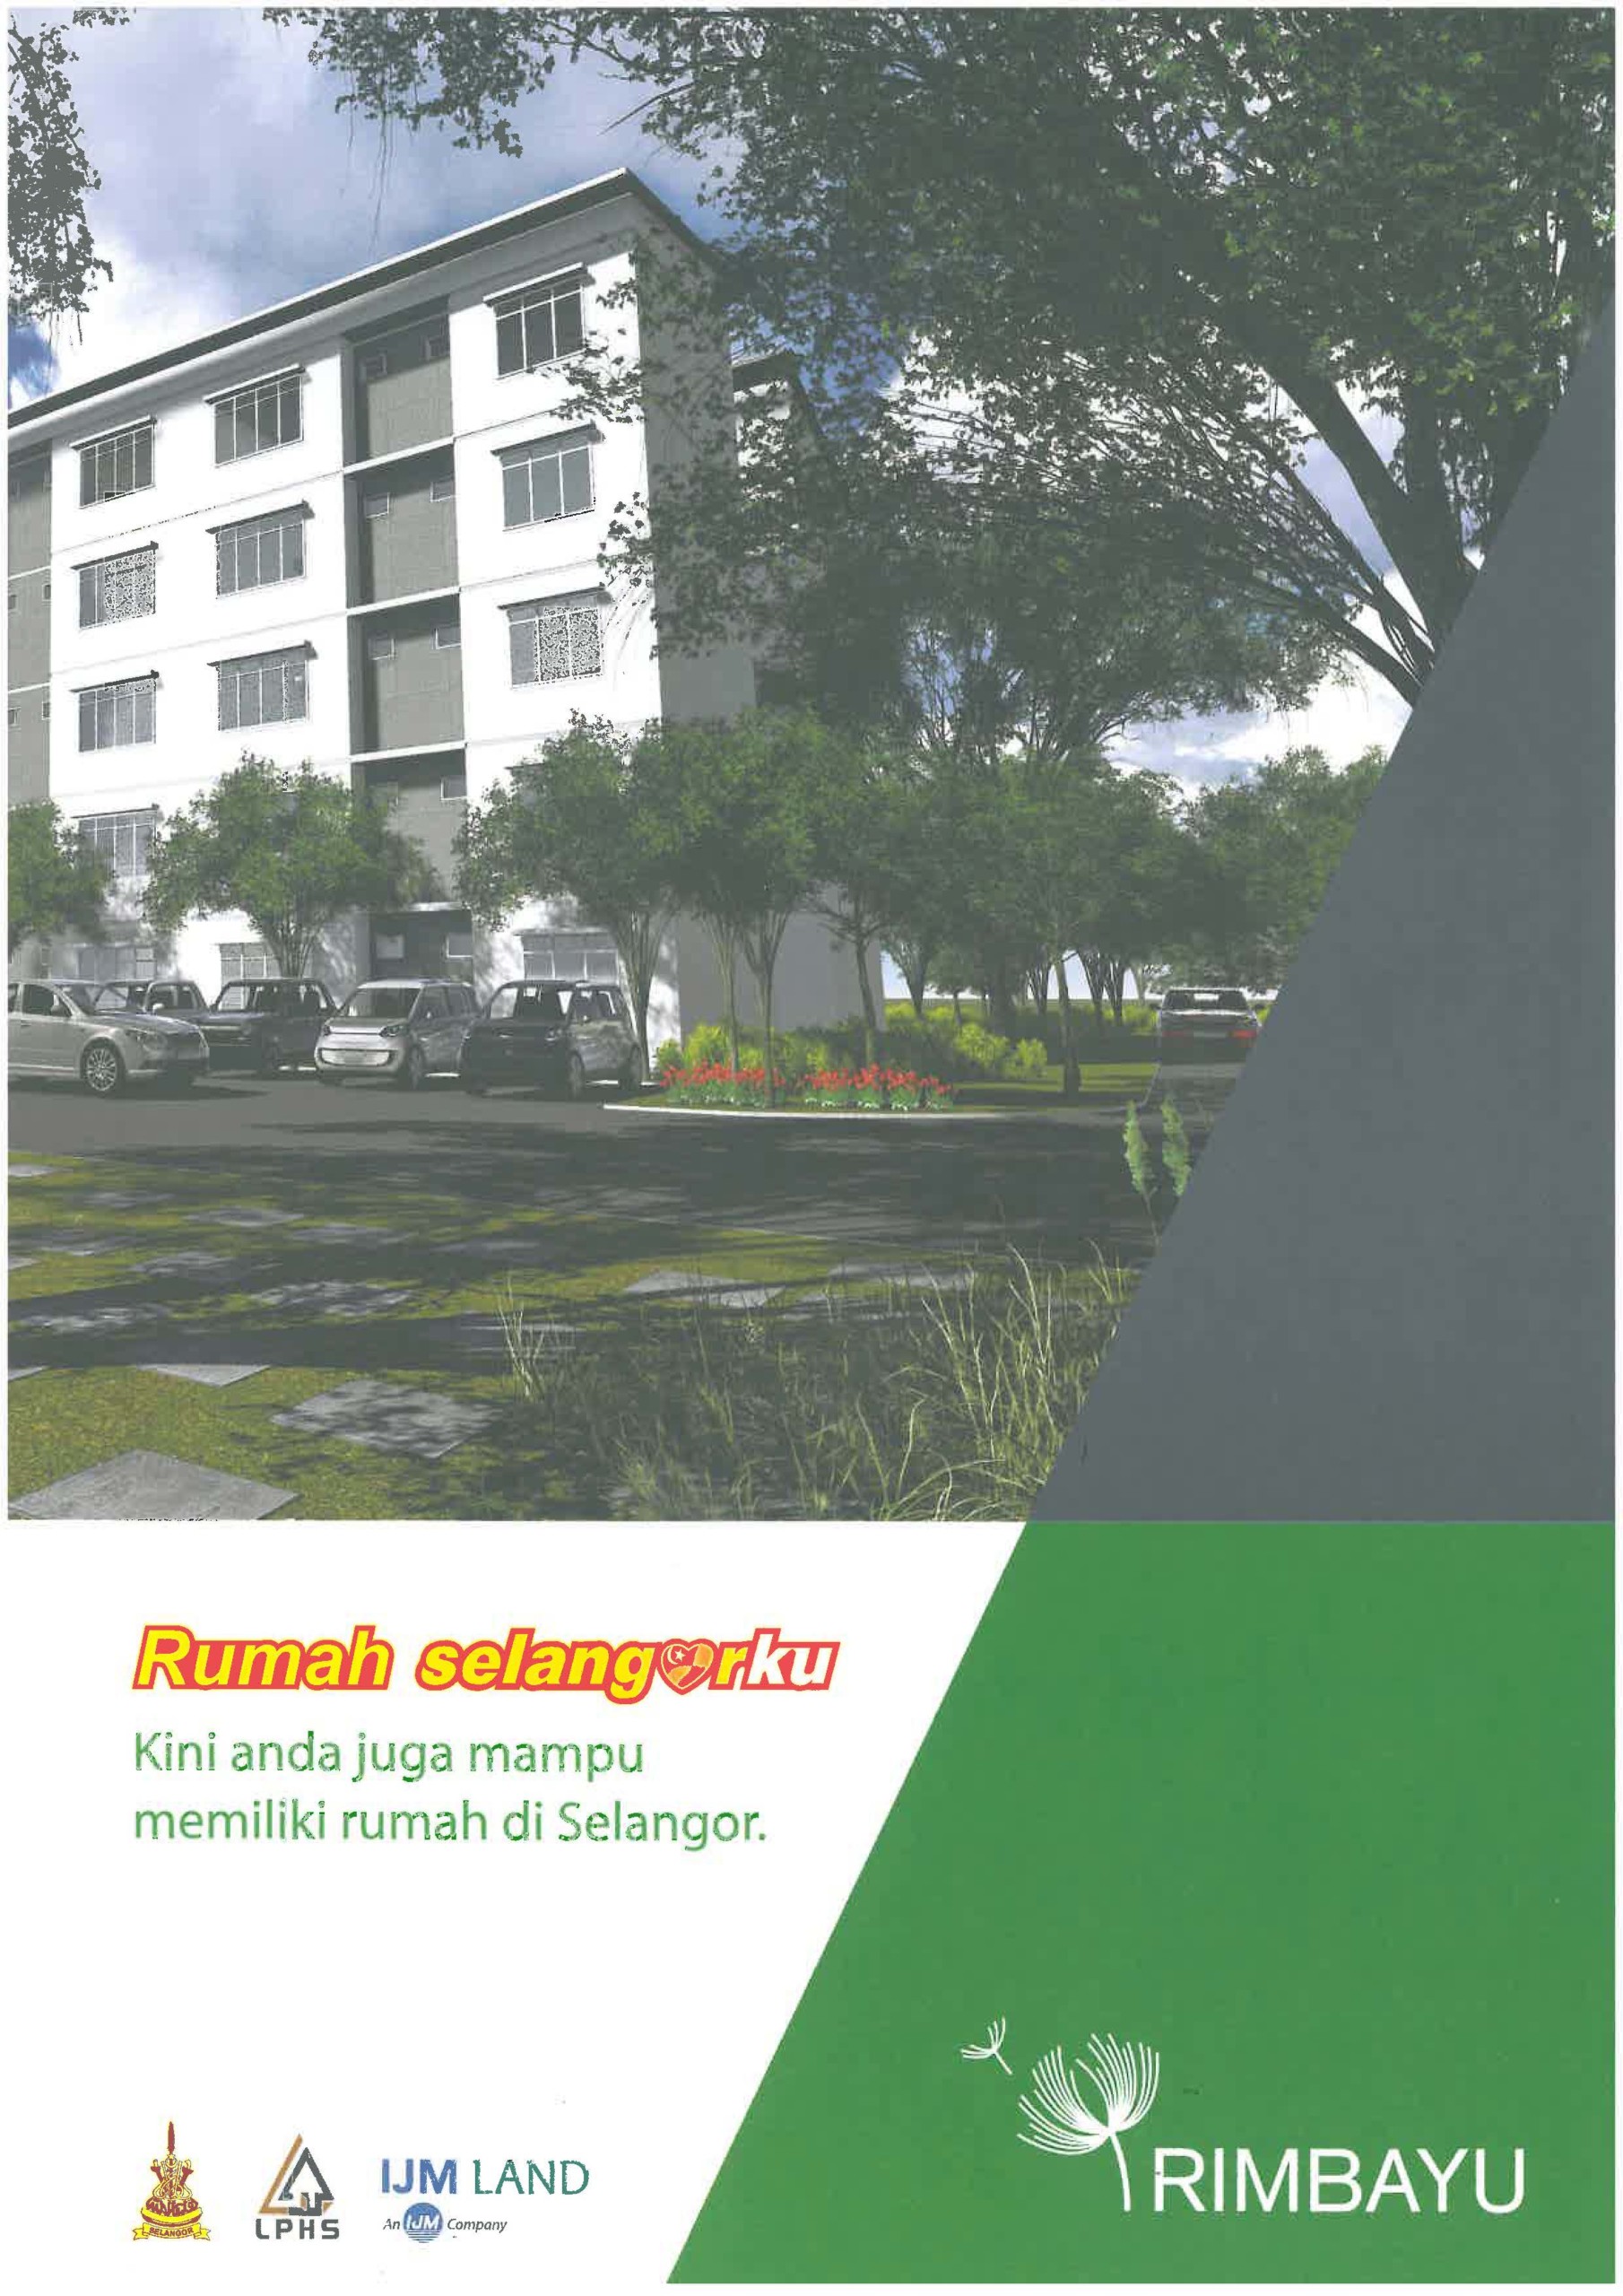 Bandar Rimbayu - Rumah SelangorKu